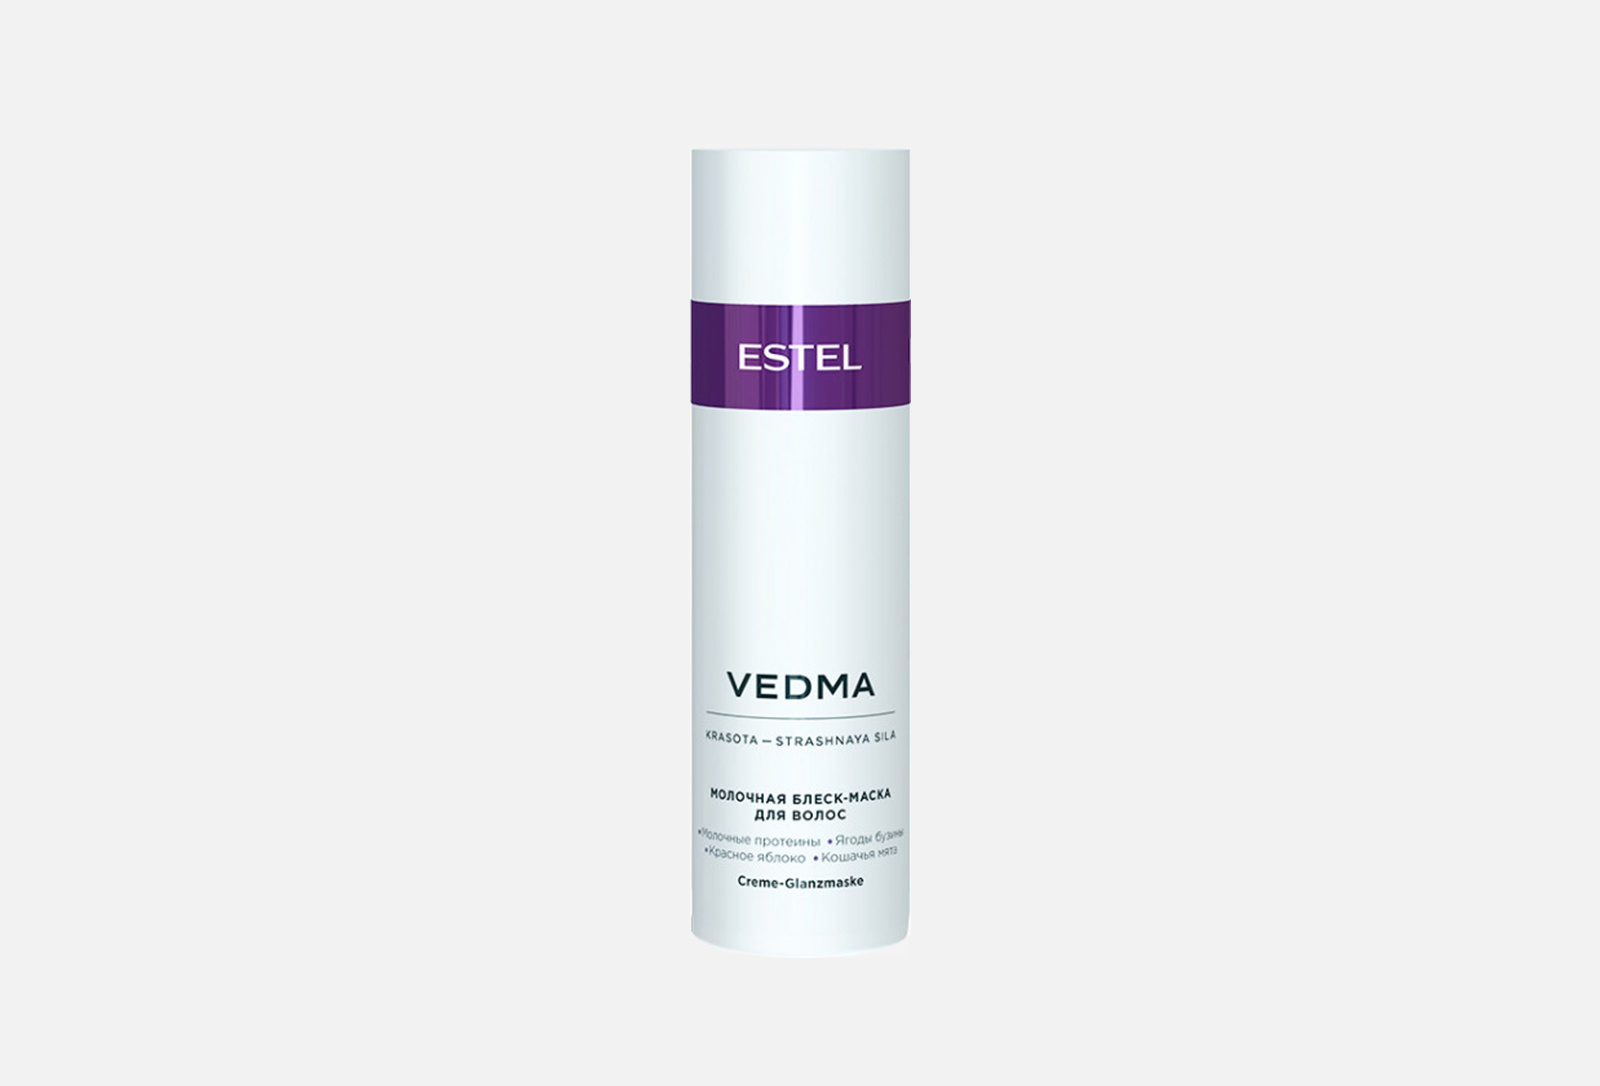 Молочная блеск- маска для волос vedma by Estel, 200 мл